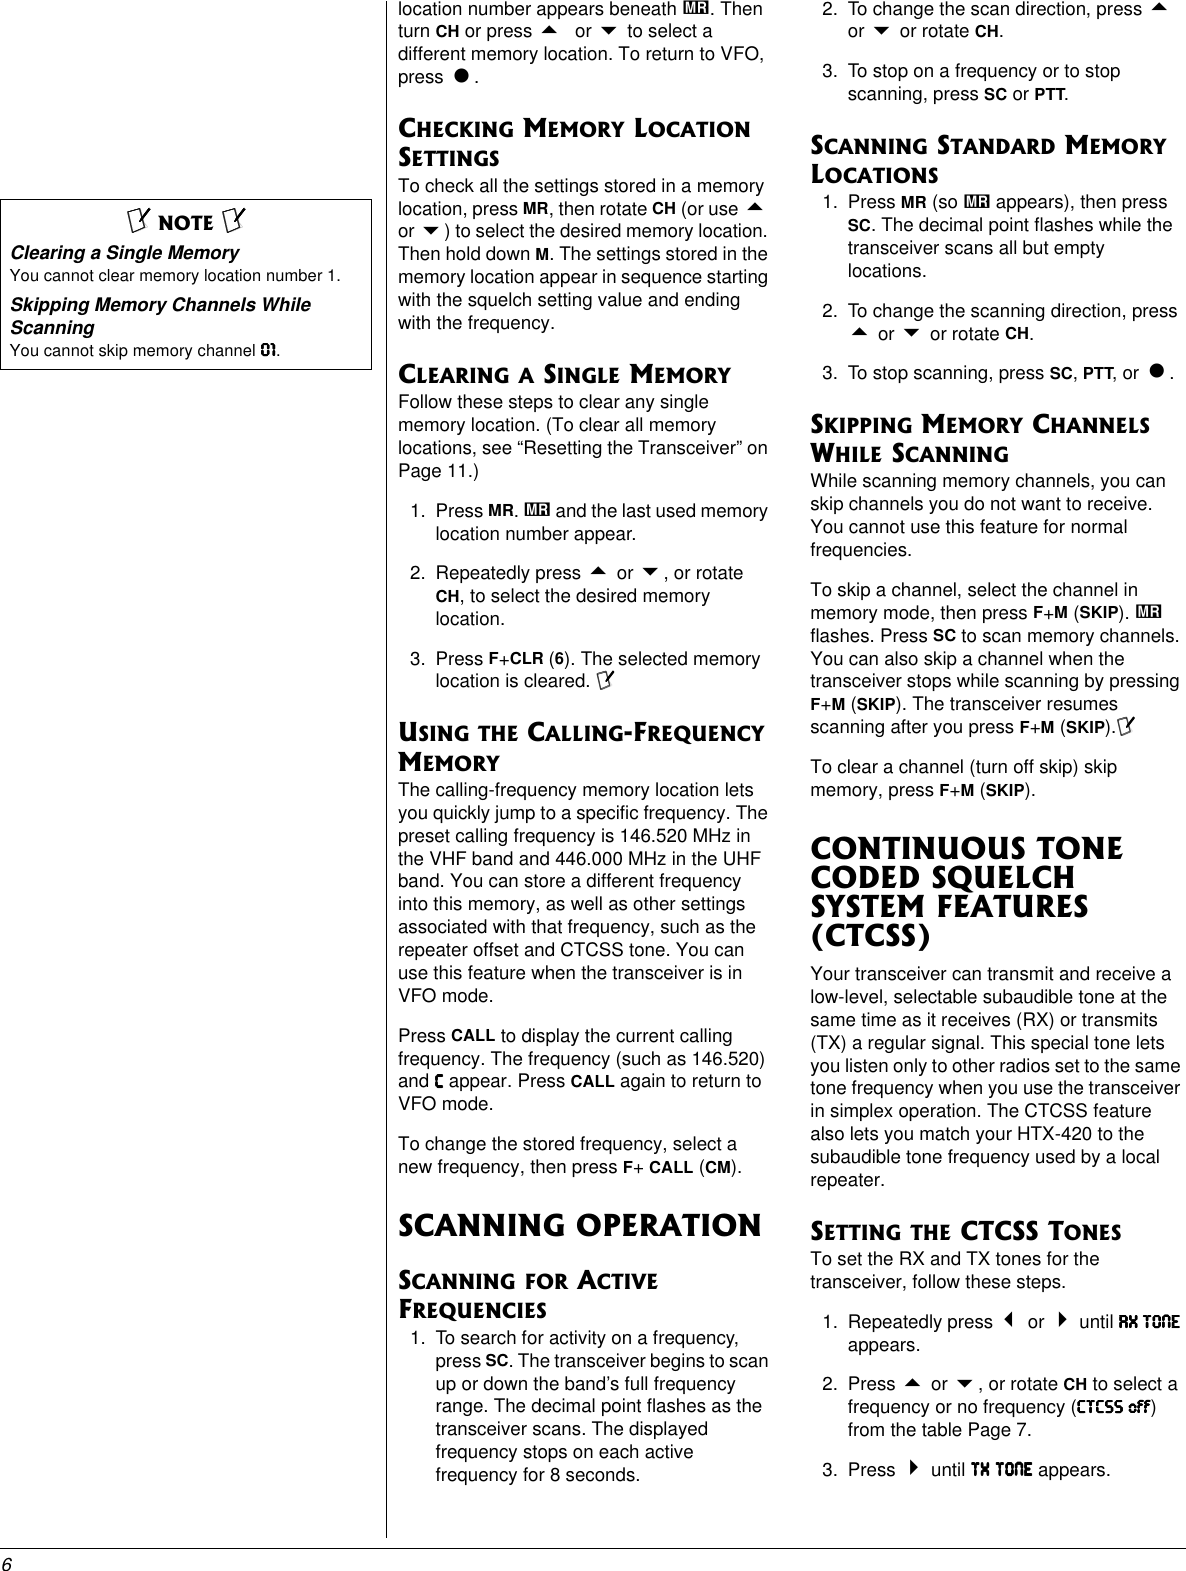 Page 6 of 11 - Radio-Shack Radio-Shack-Htx-420-Users-Manual- Www RadioShack With CircleR  Radio-shack-htx-420-users-manual